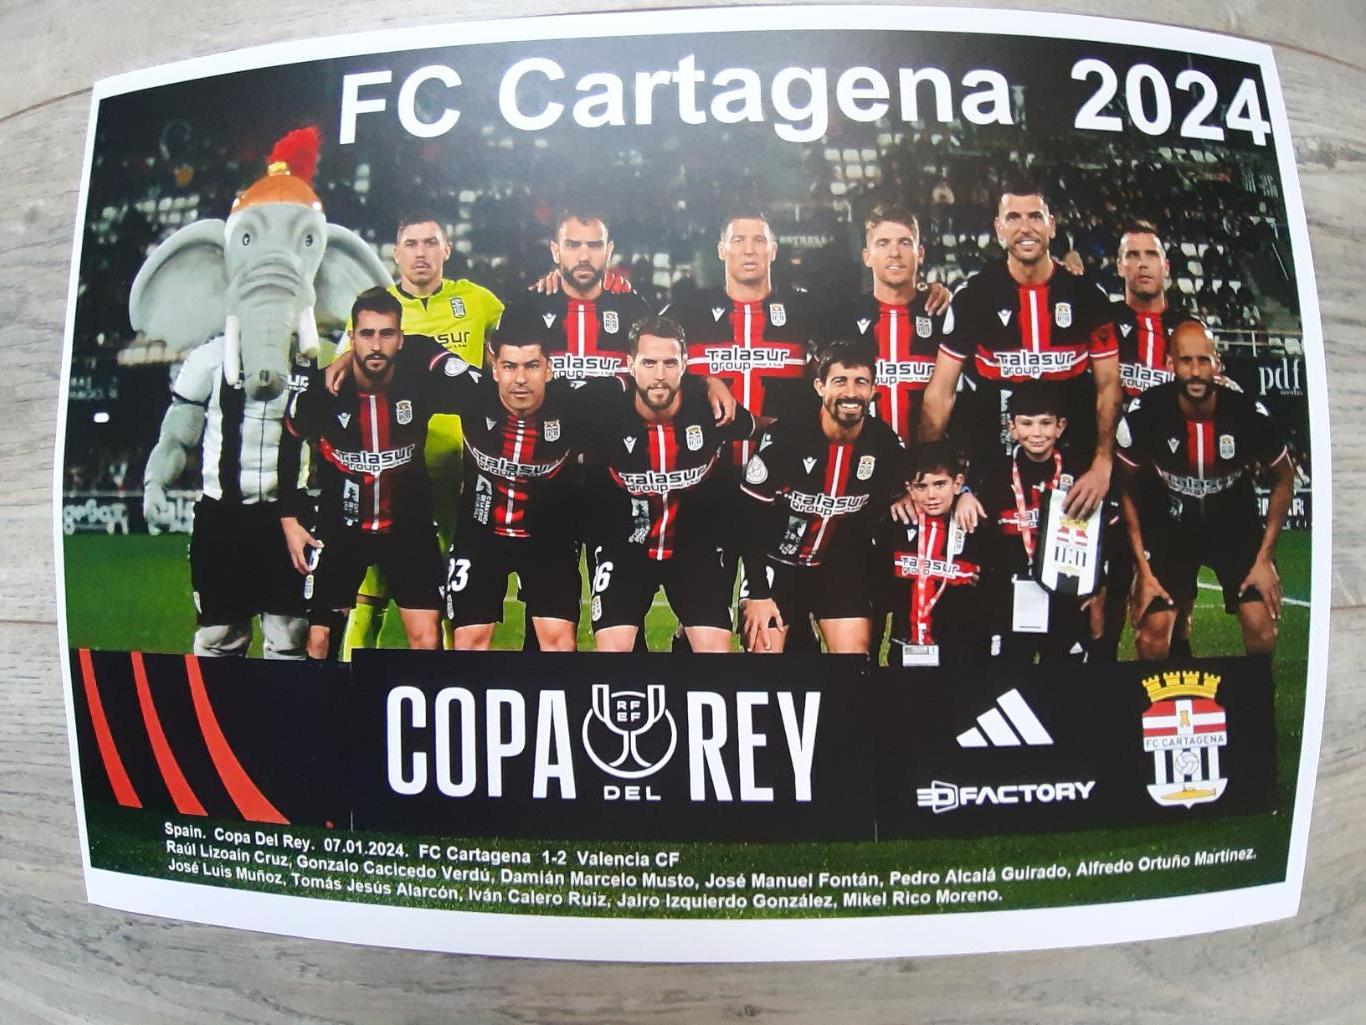 FC Cartagena.2024 (Spain)